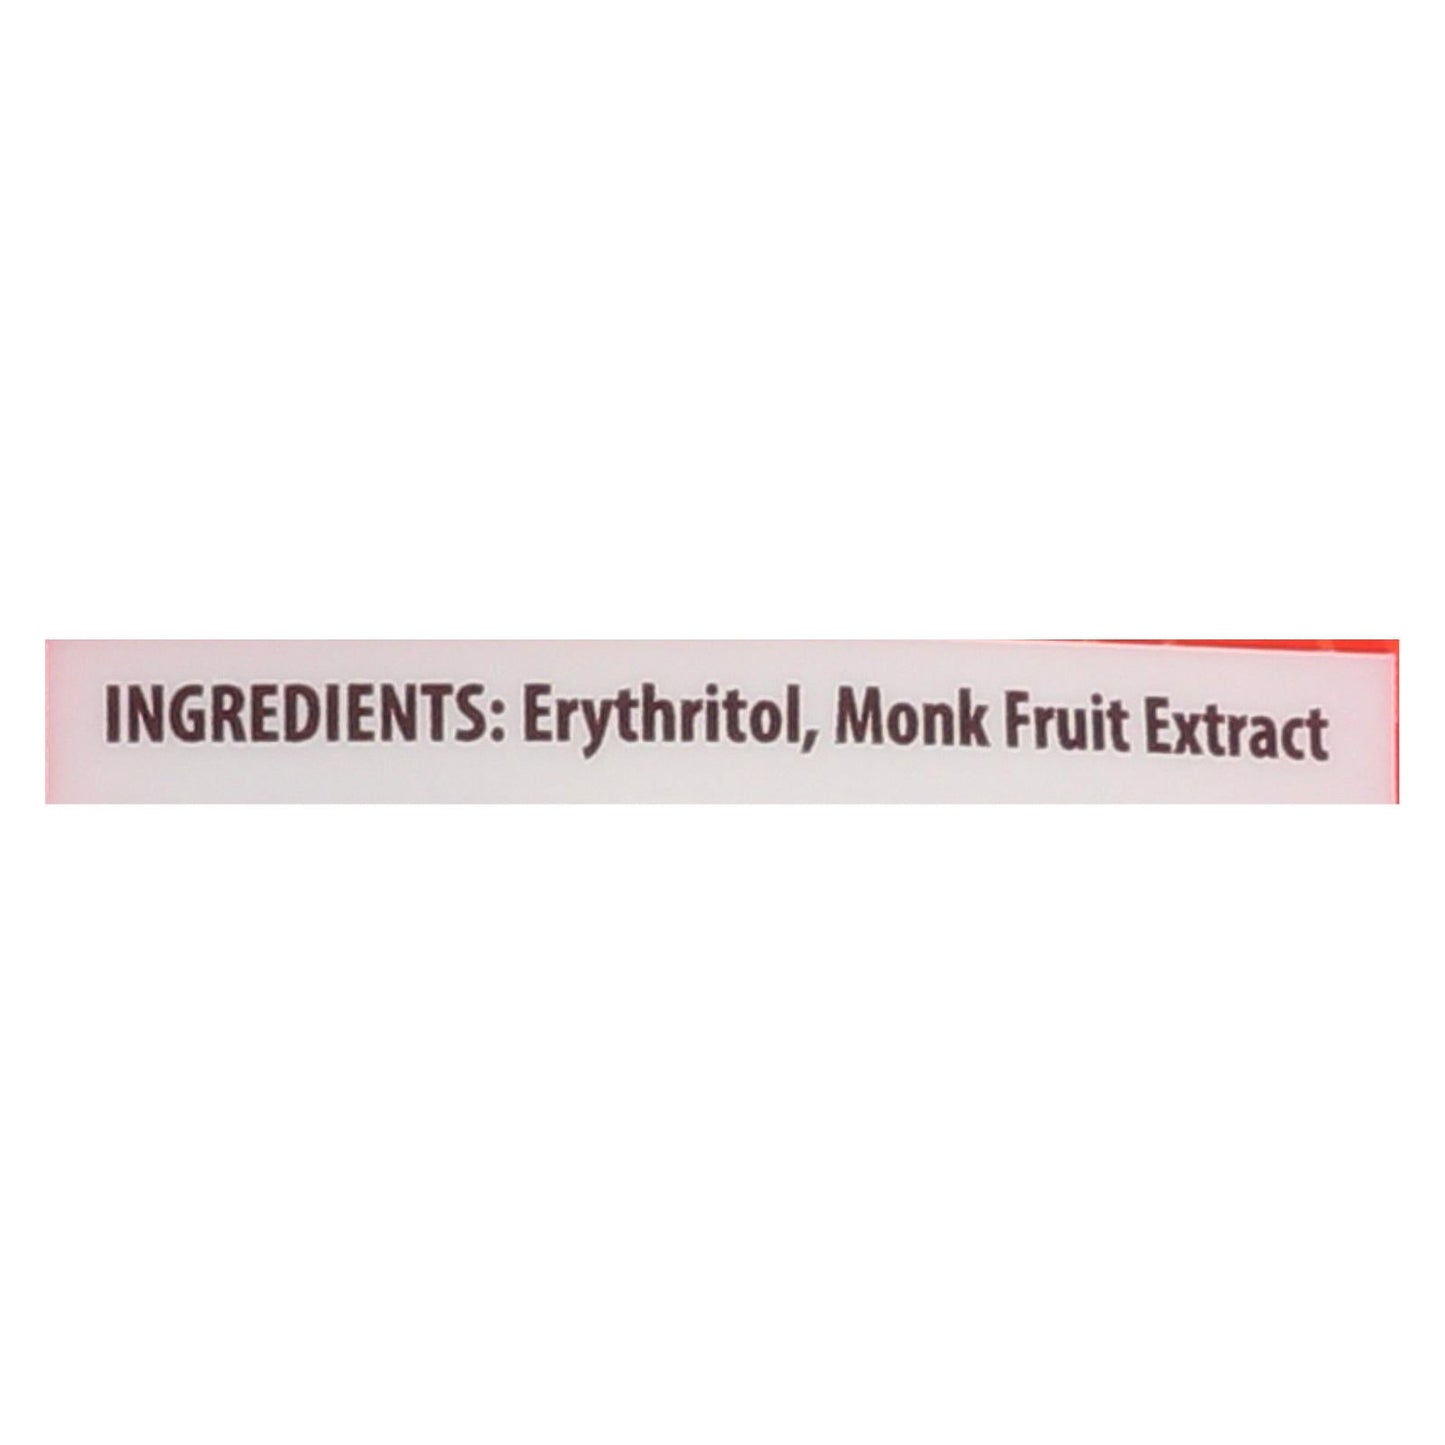 Lakanto - Classic Monkfruit Sweetener - Case Of 8 - 16 Oz. | OnlyNaturals.us